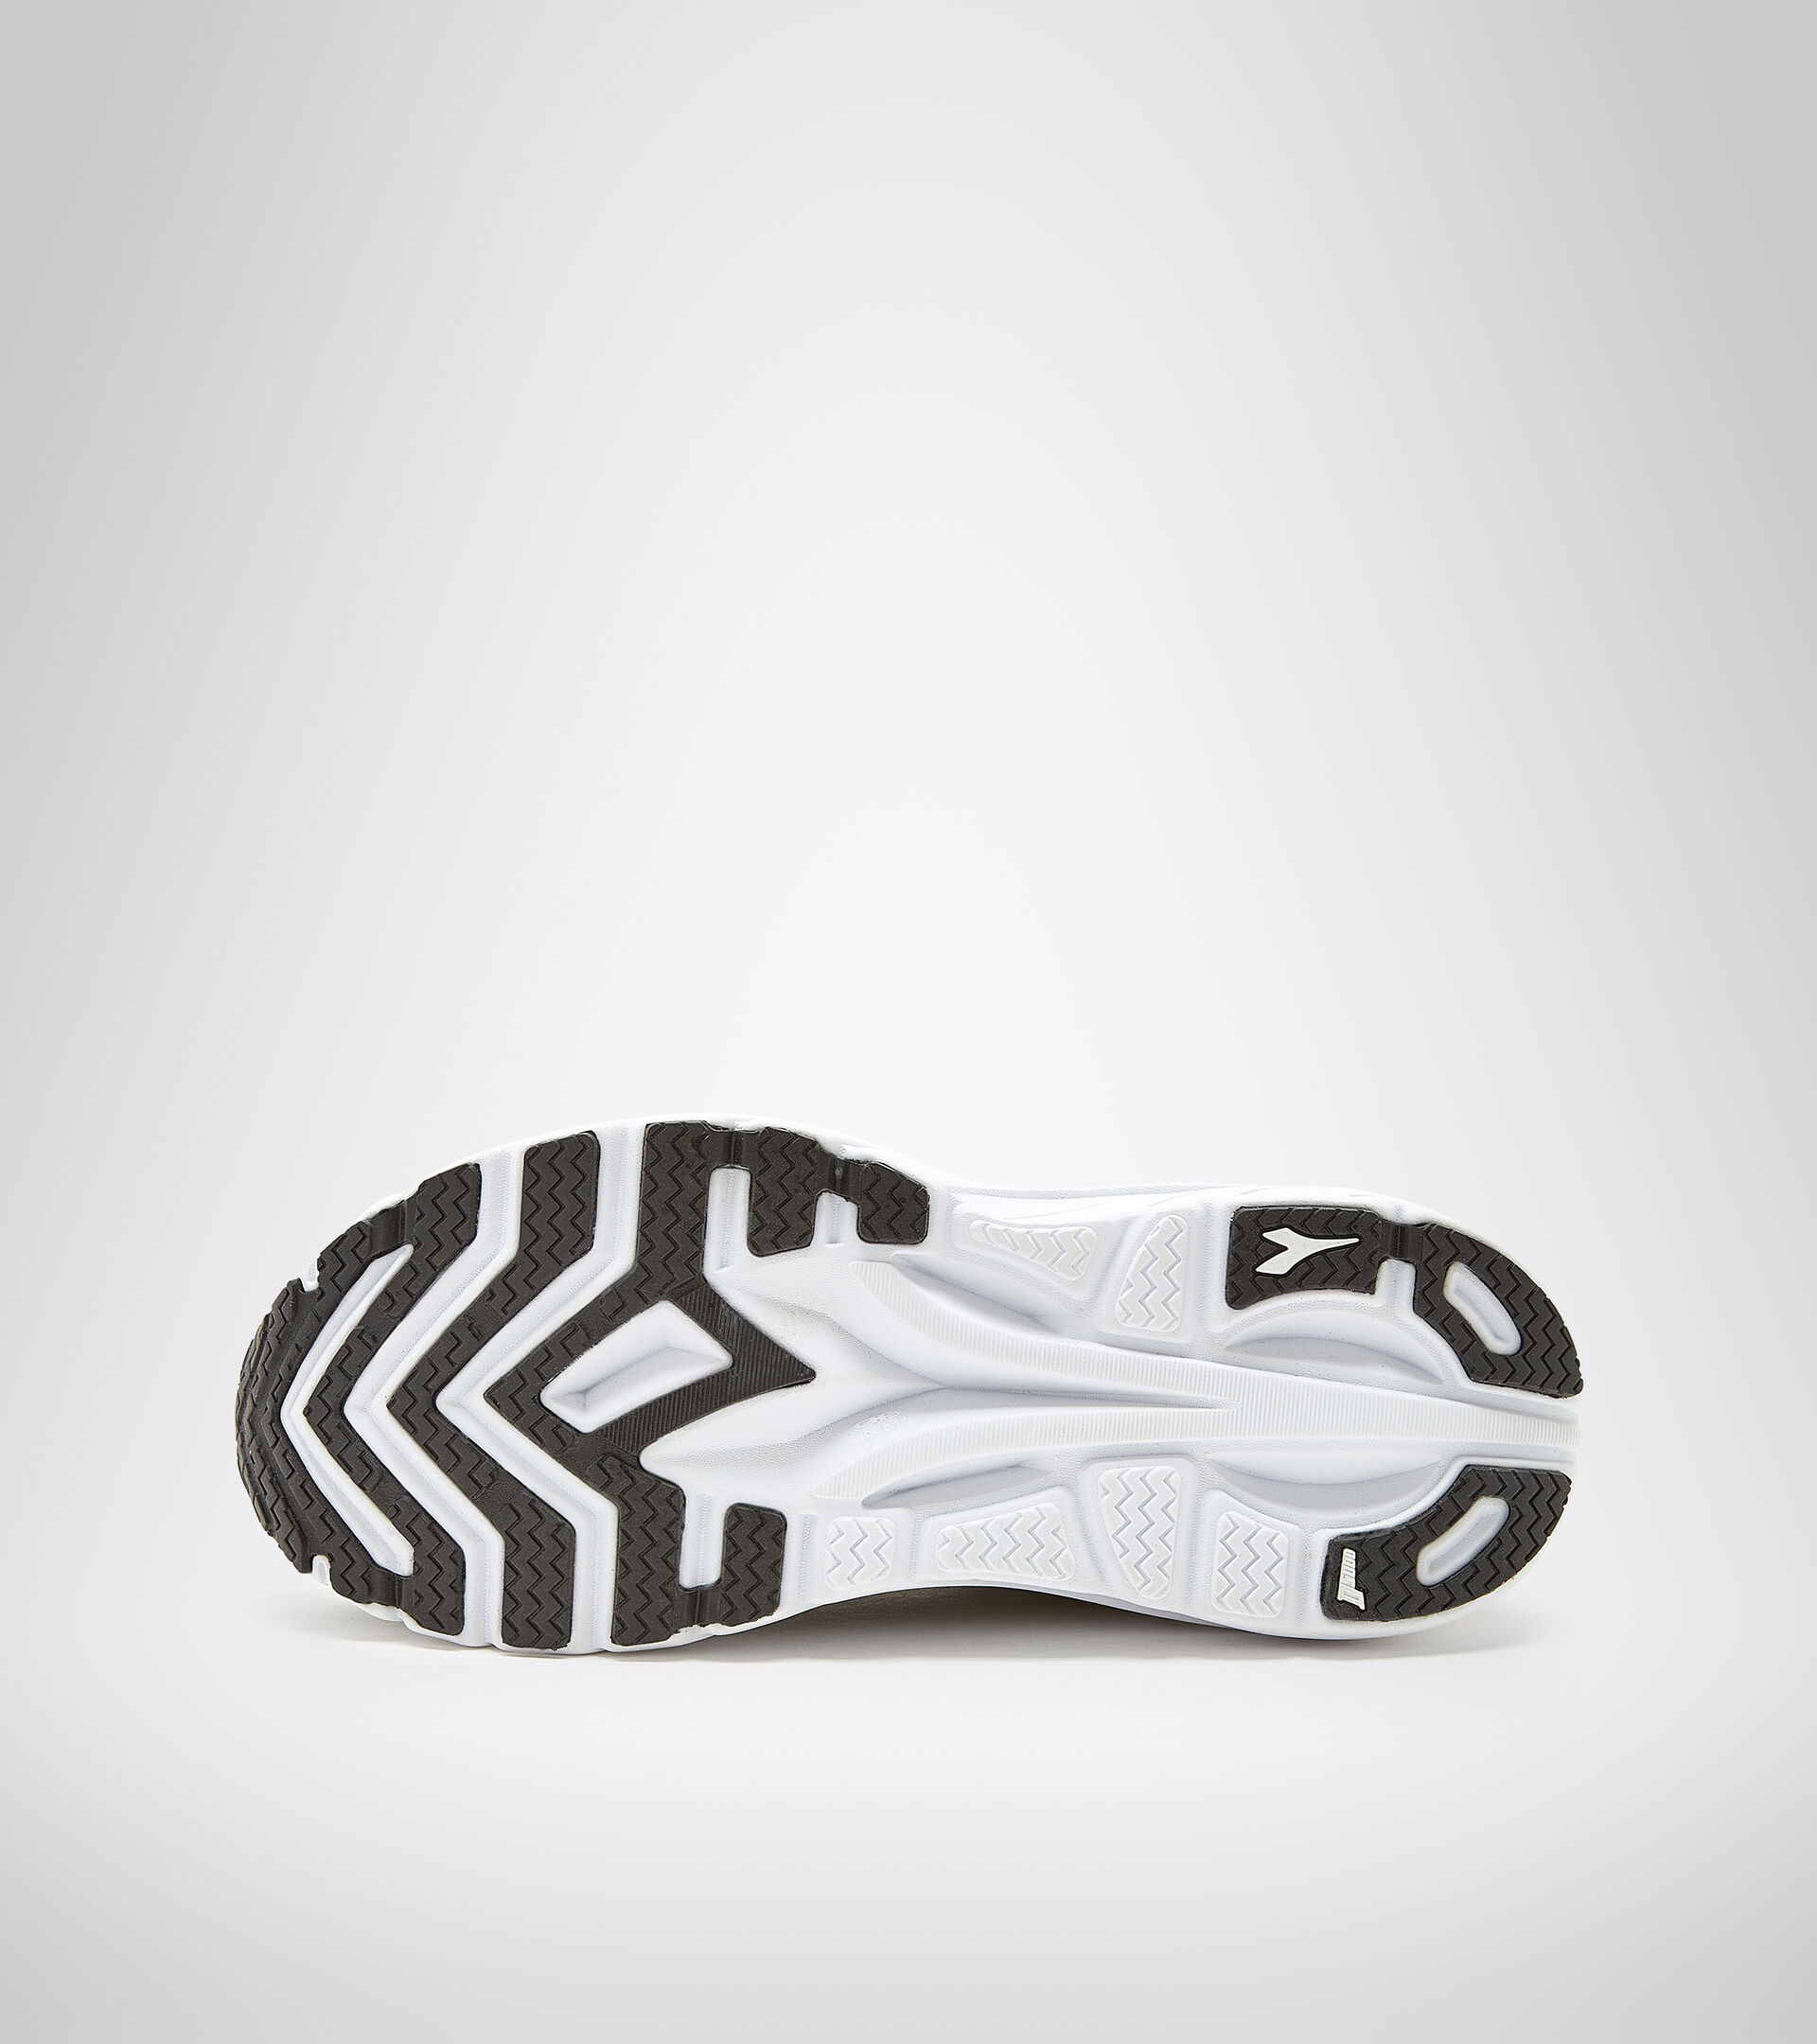 Made in Italy - Running shoes - Women EQUIPE ATOMO W BLACK/GOLD/WHITE - Diadora